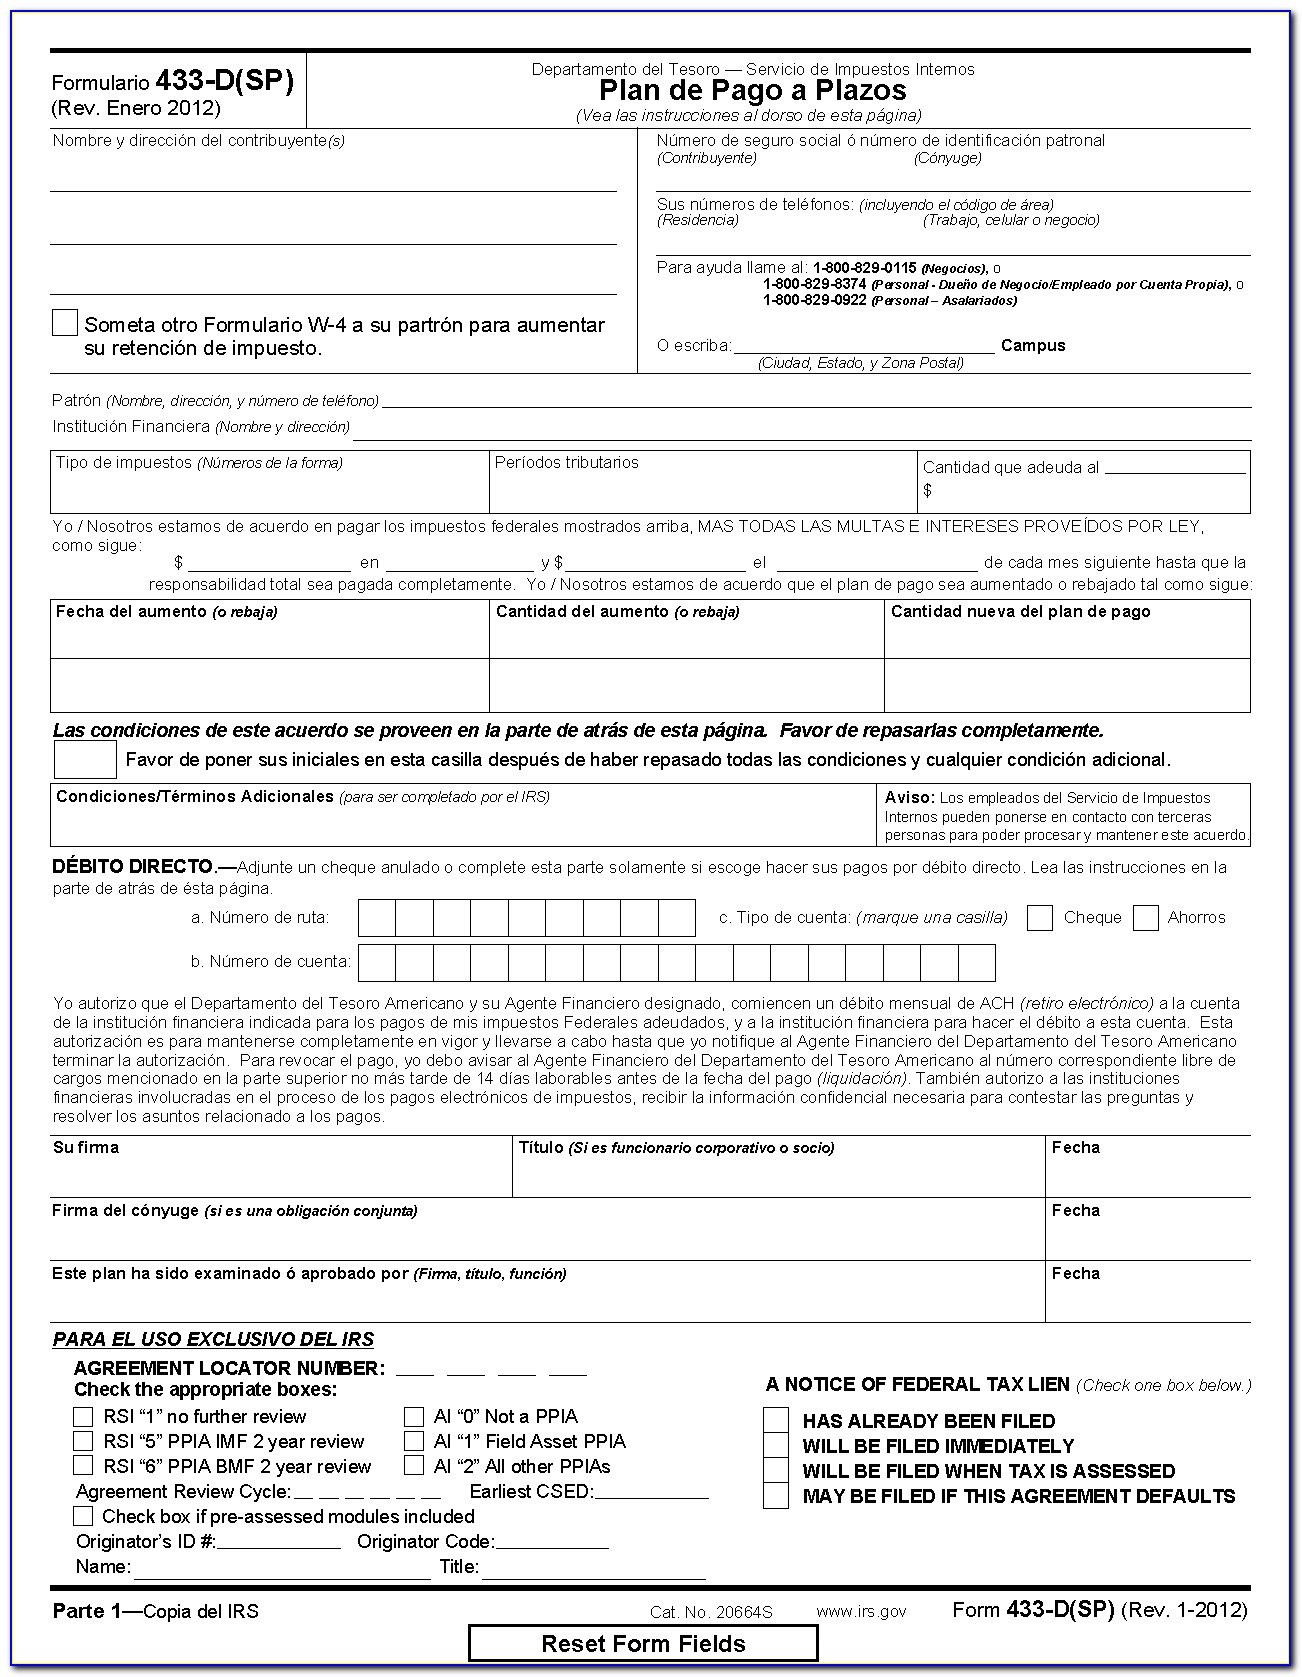 Installment Agreement Form 9465 Instructions